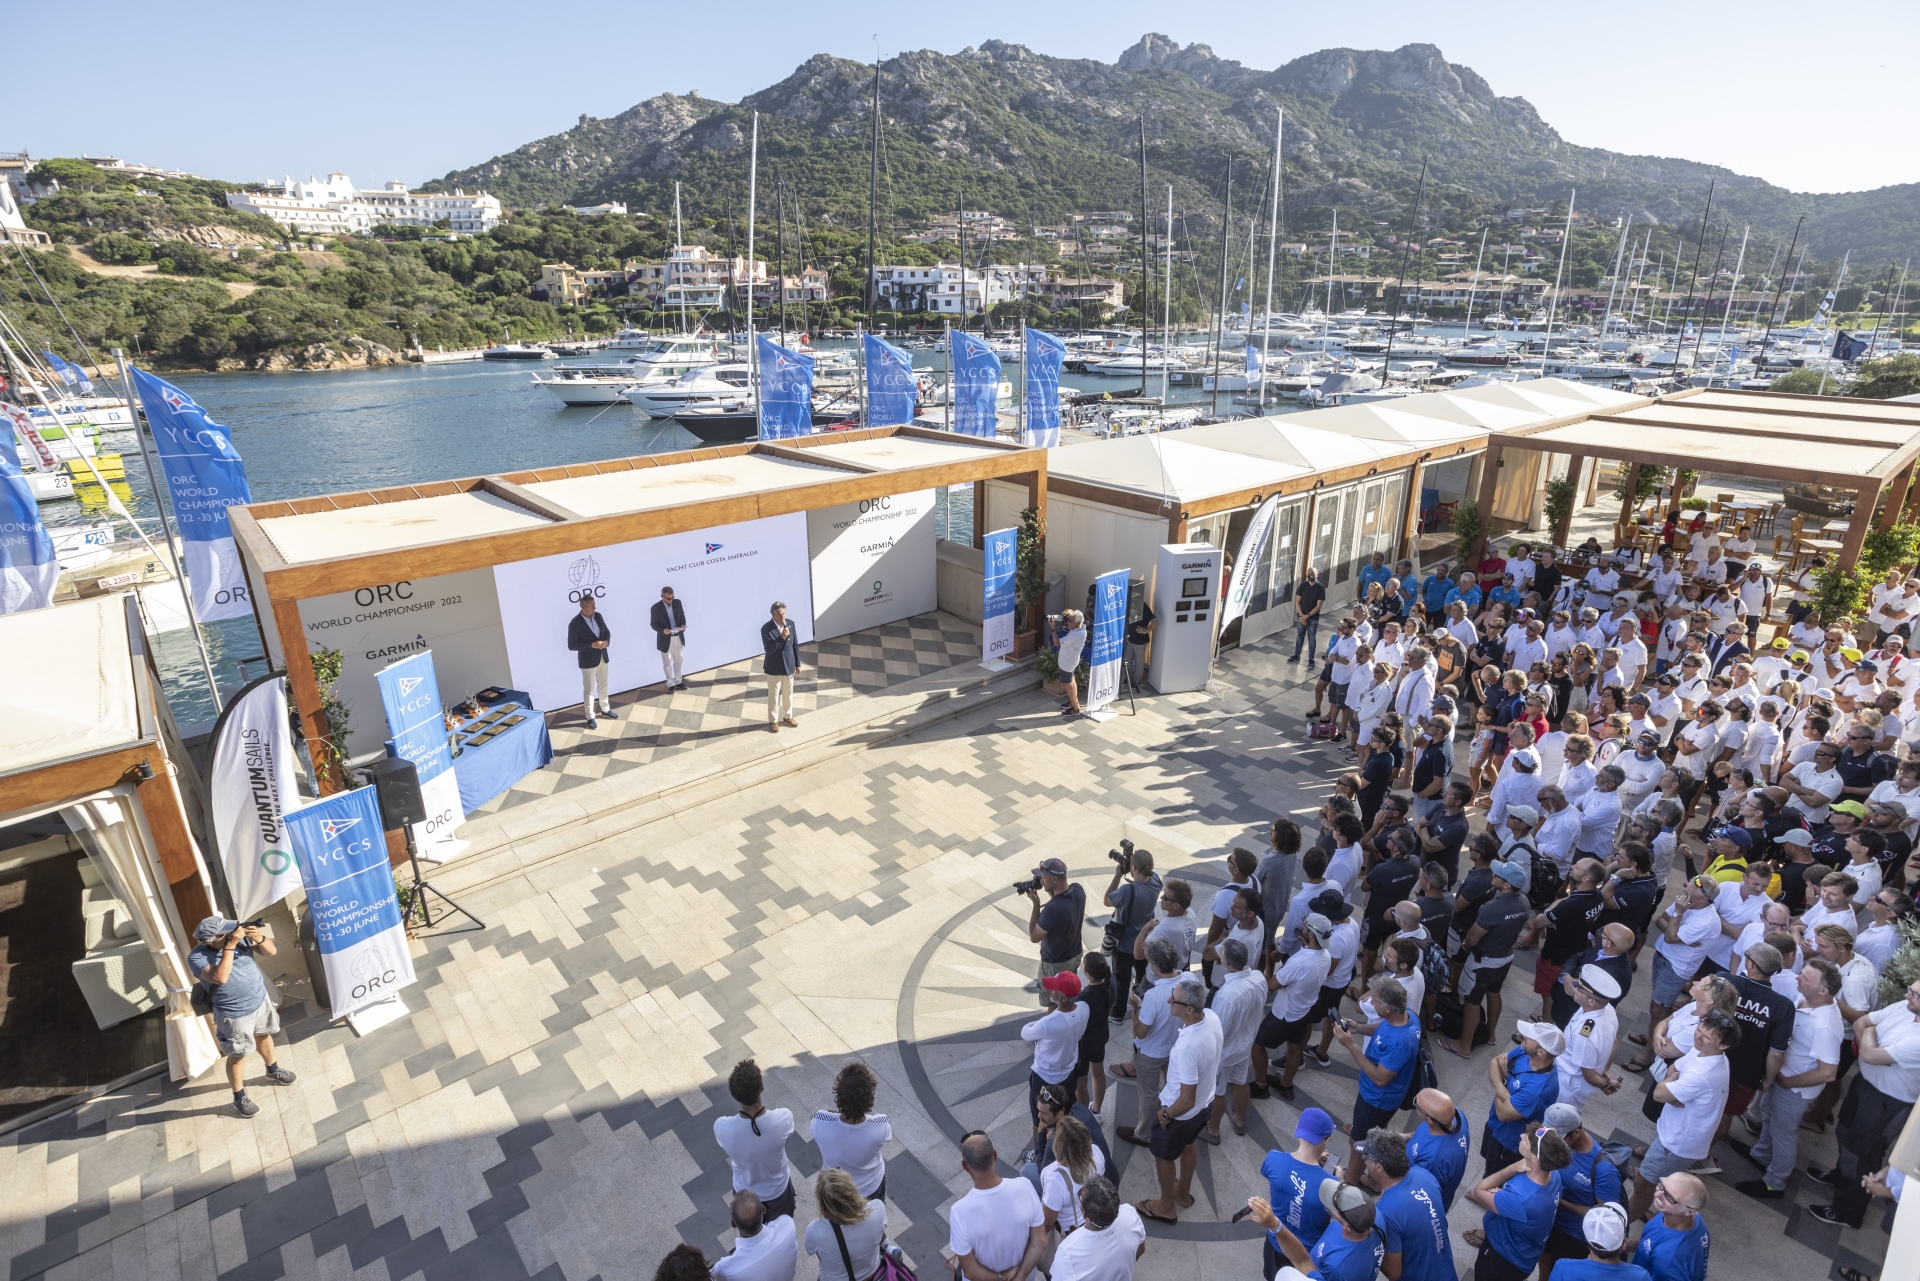 ORC World Championship wraps up successfully in Porto Cervo - Press Release - Yacht Club Costa Smeralda